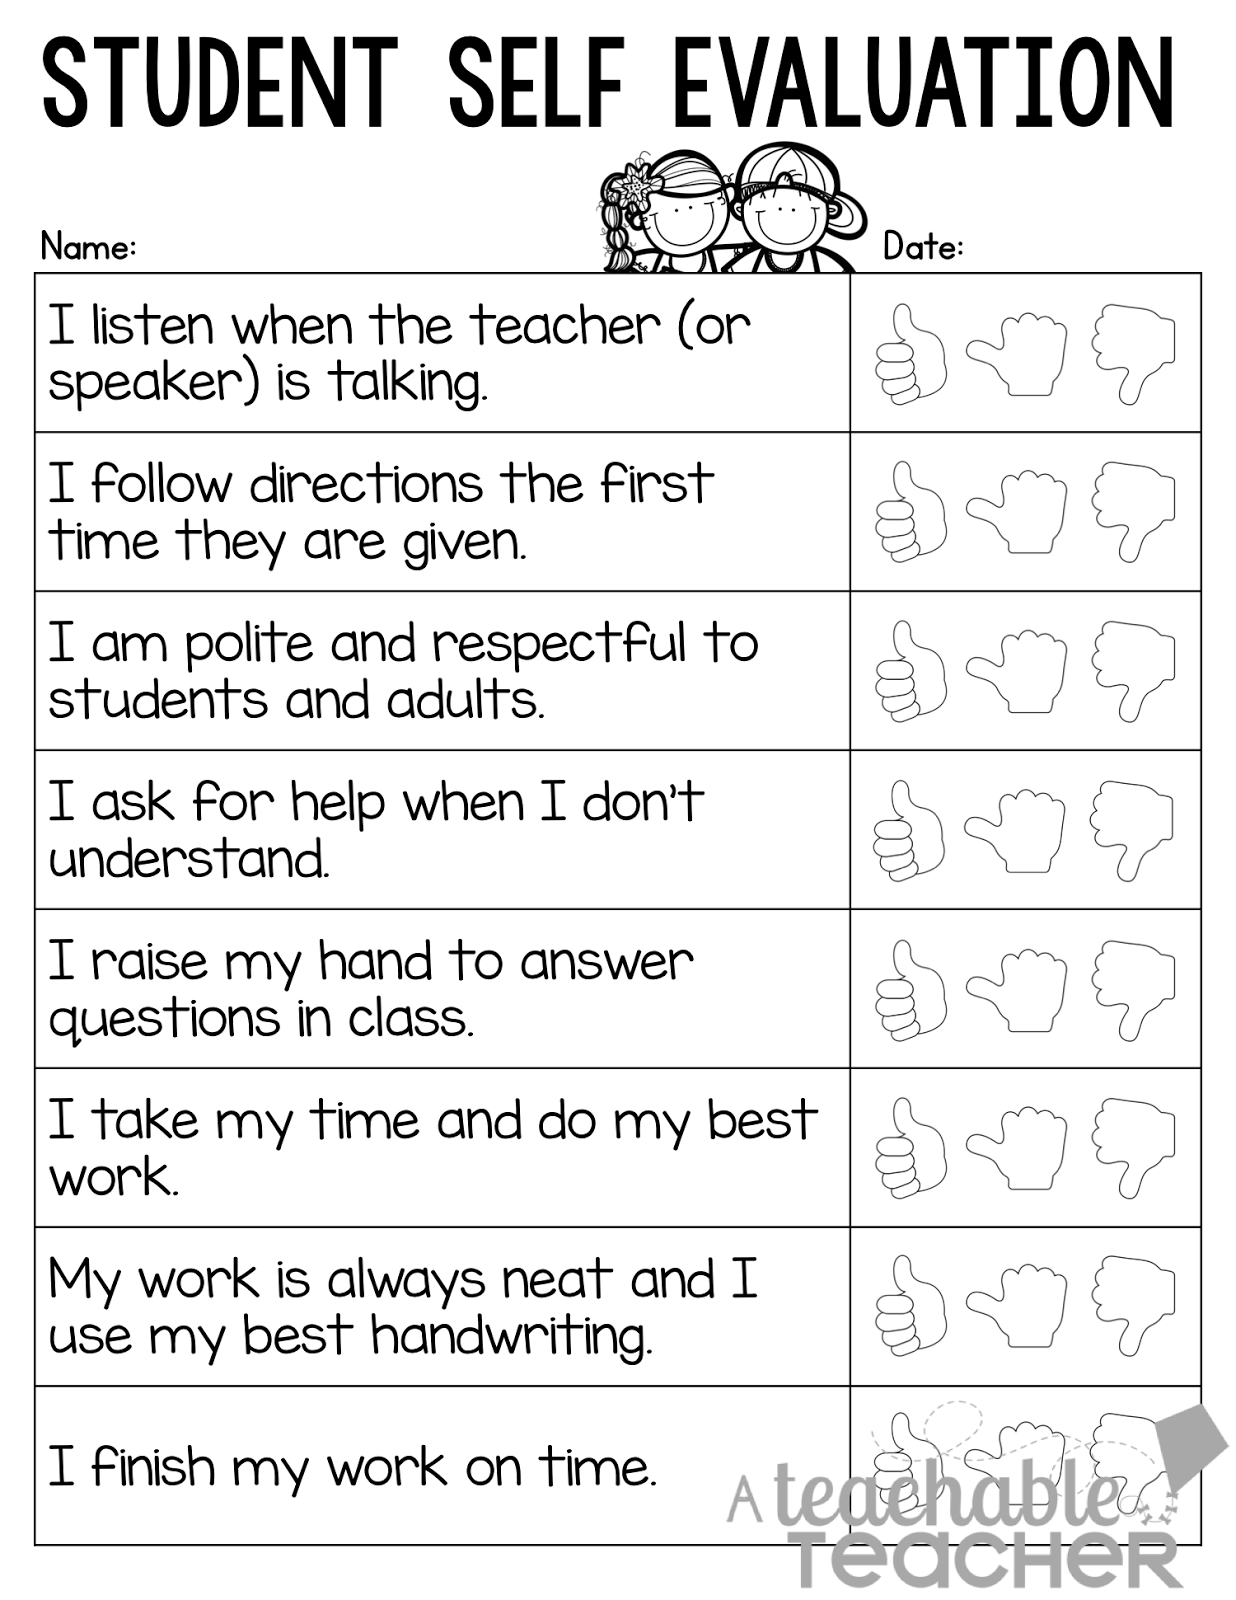 Student Self Evaluation Form Image